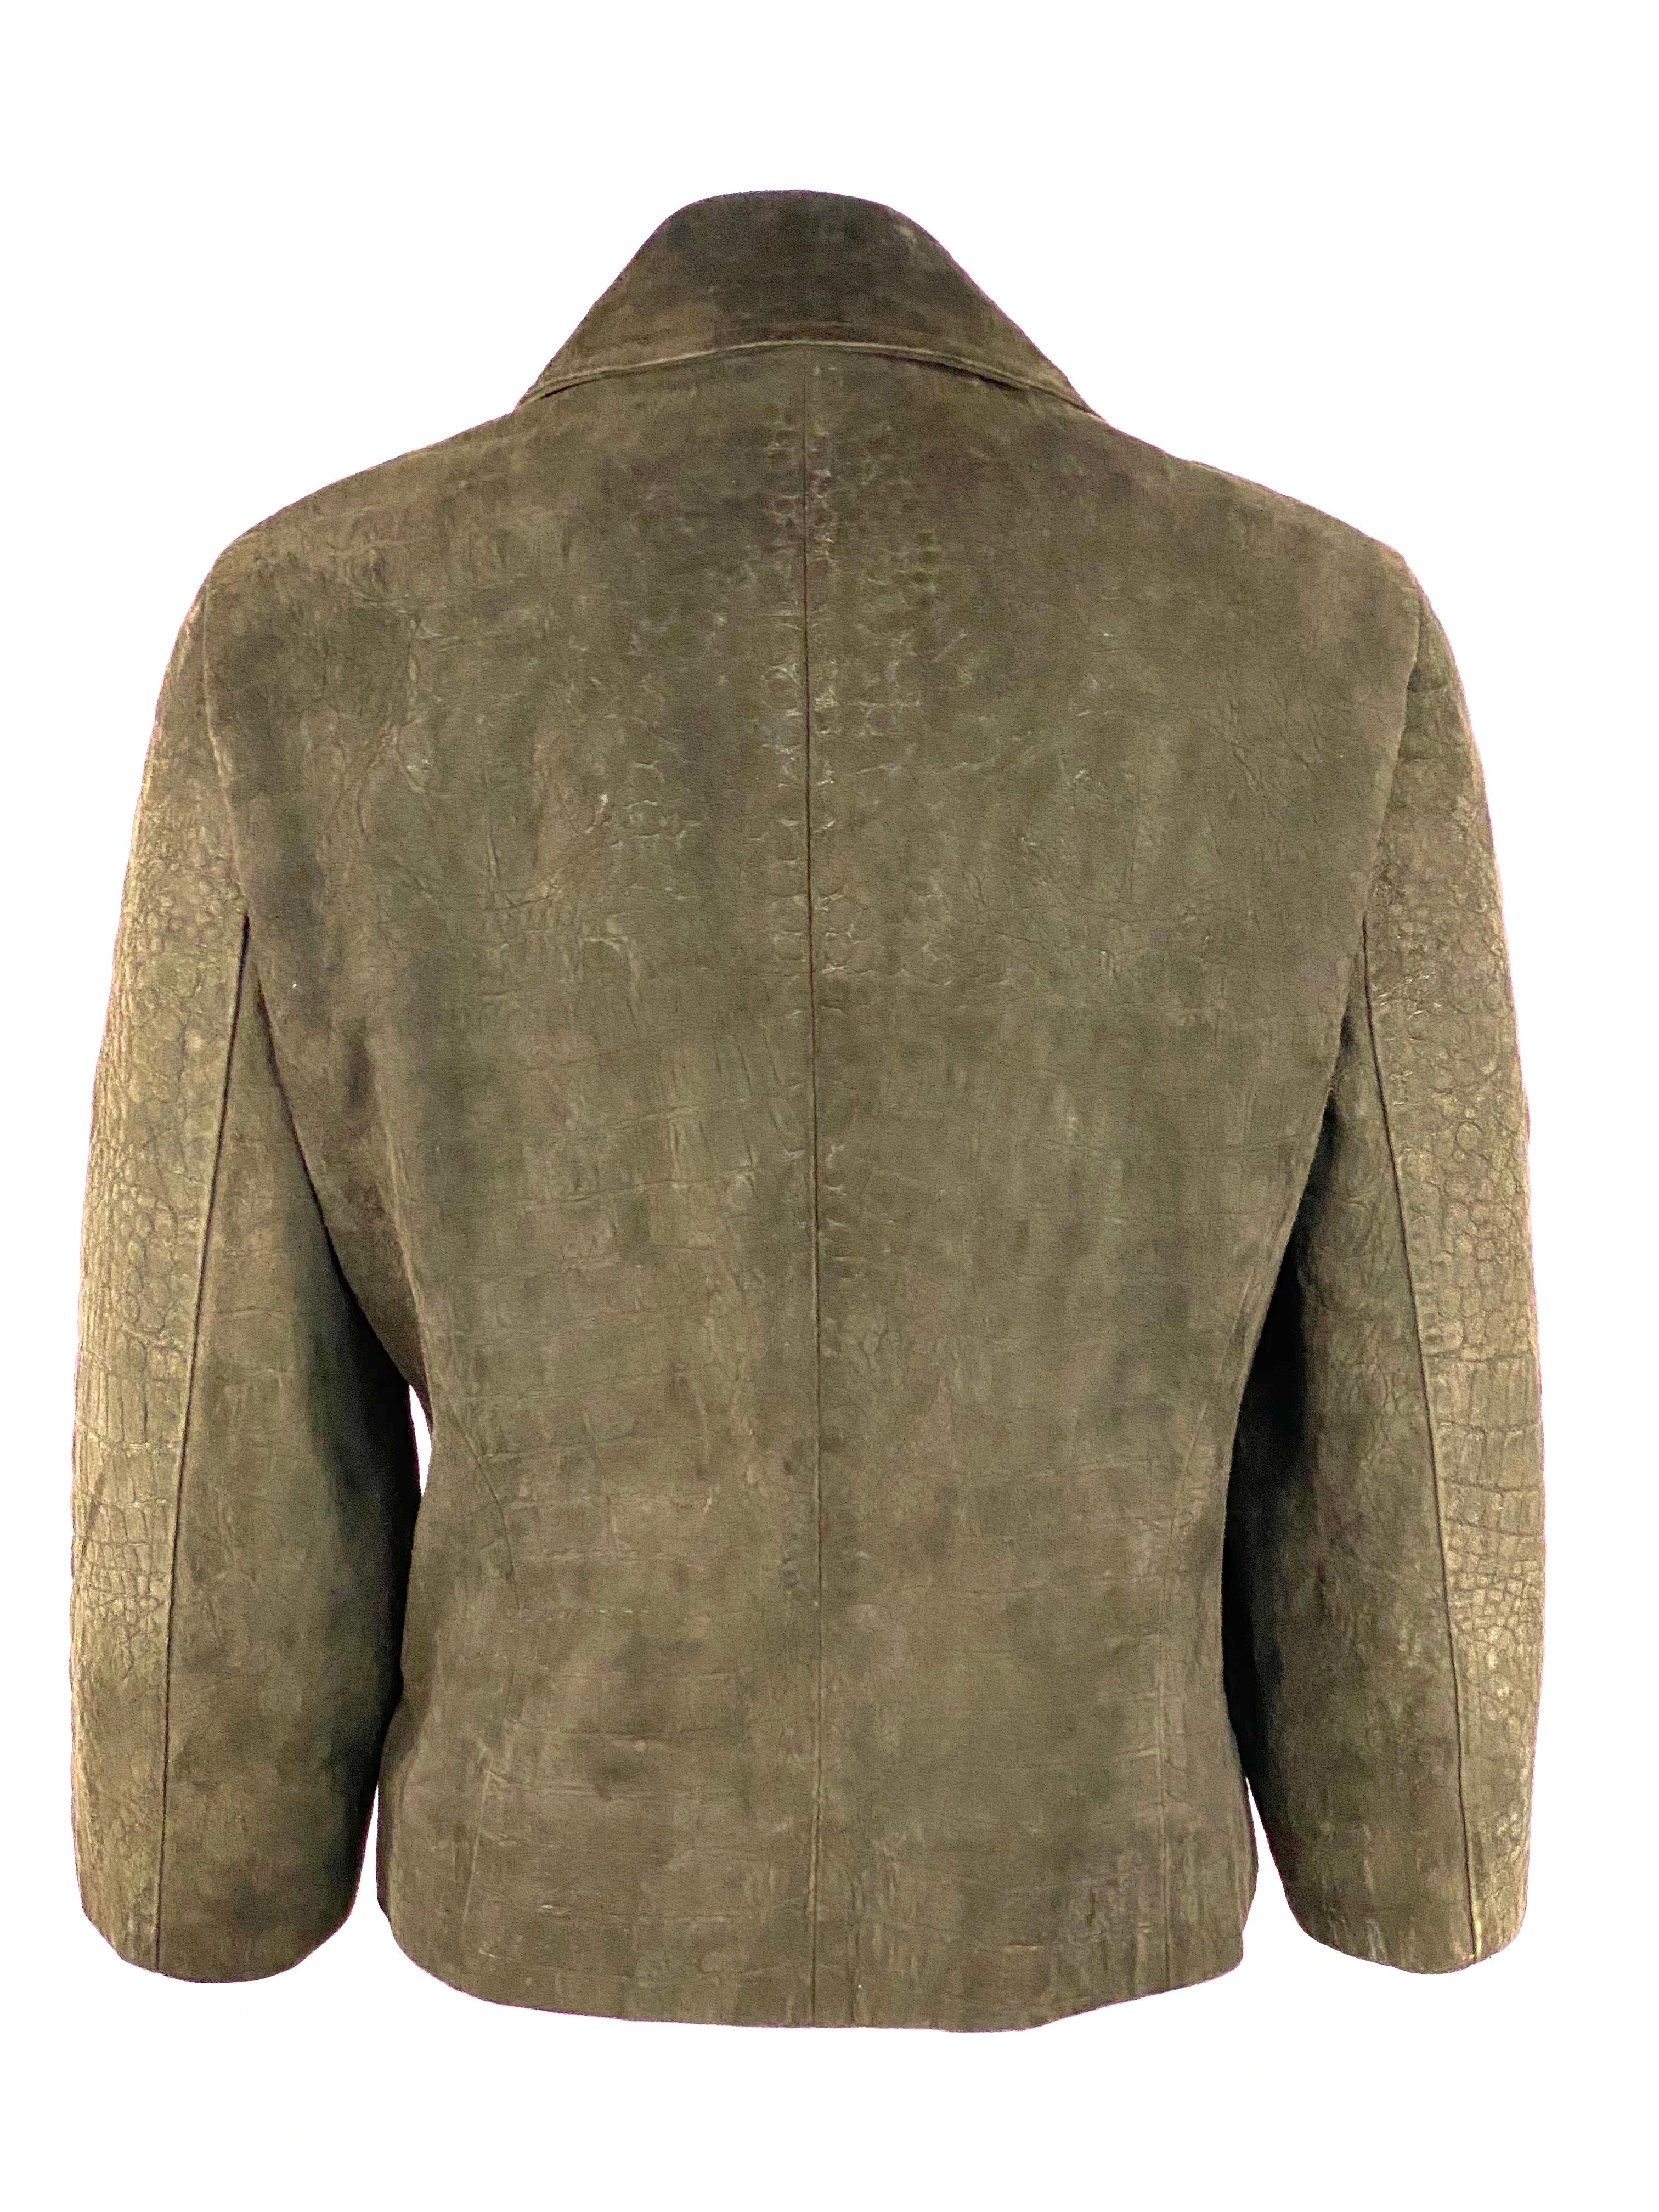 Women's or Men's Vintage CELINE Brown Suede Animal Print Blazer Jacket Size 42 